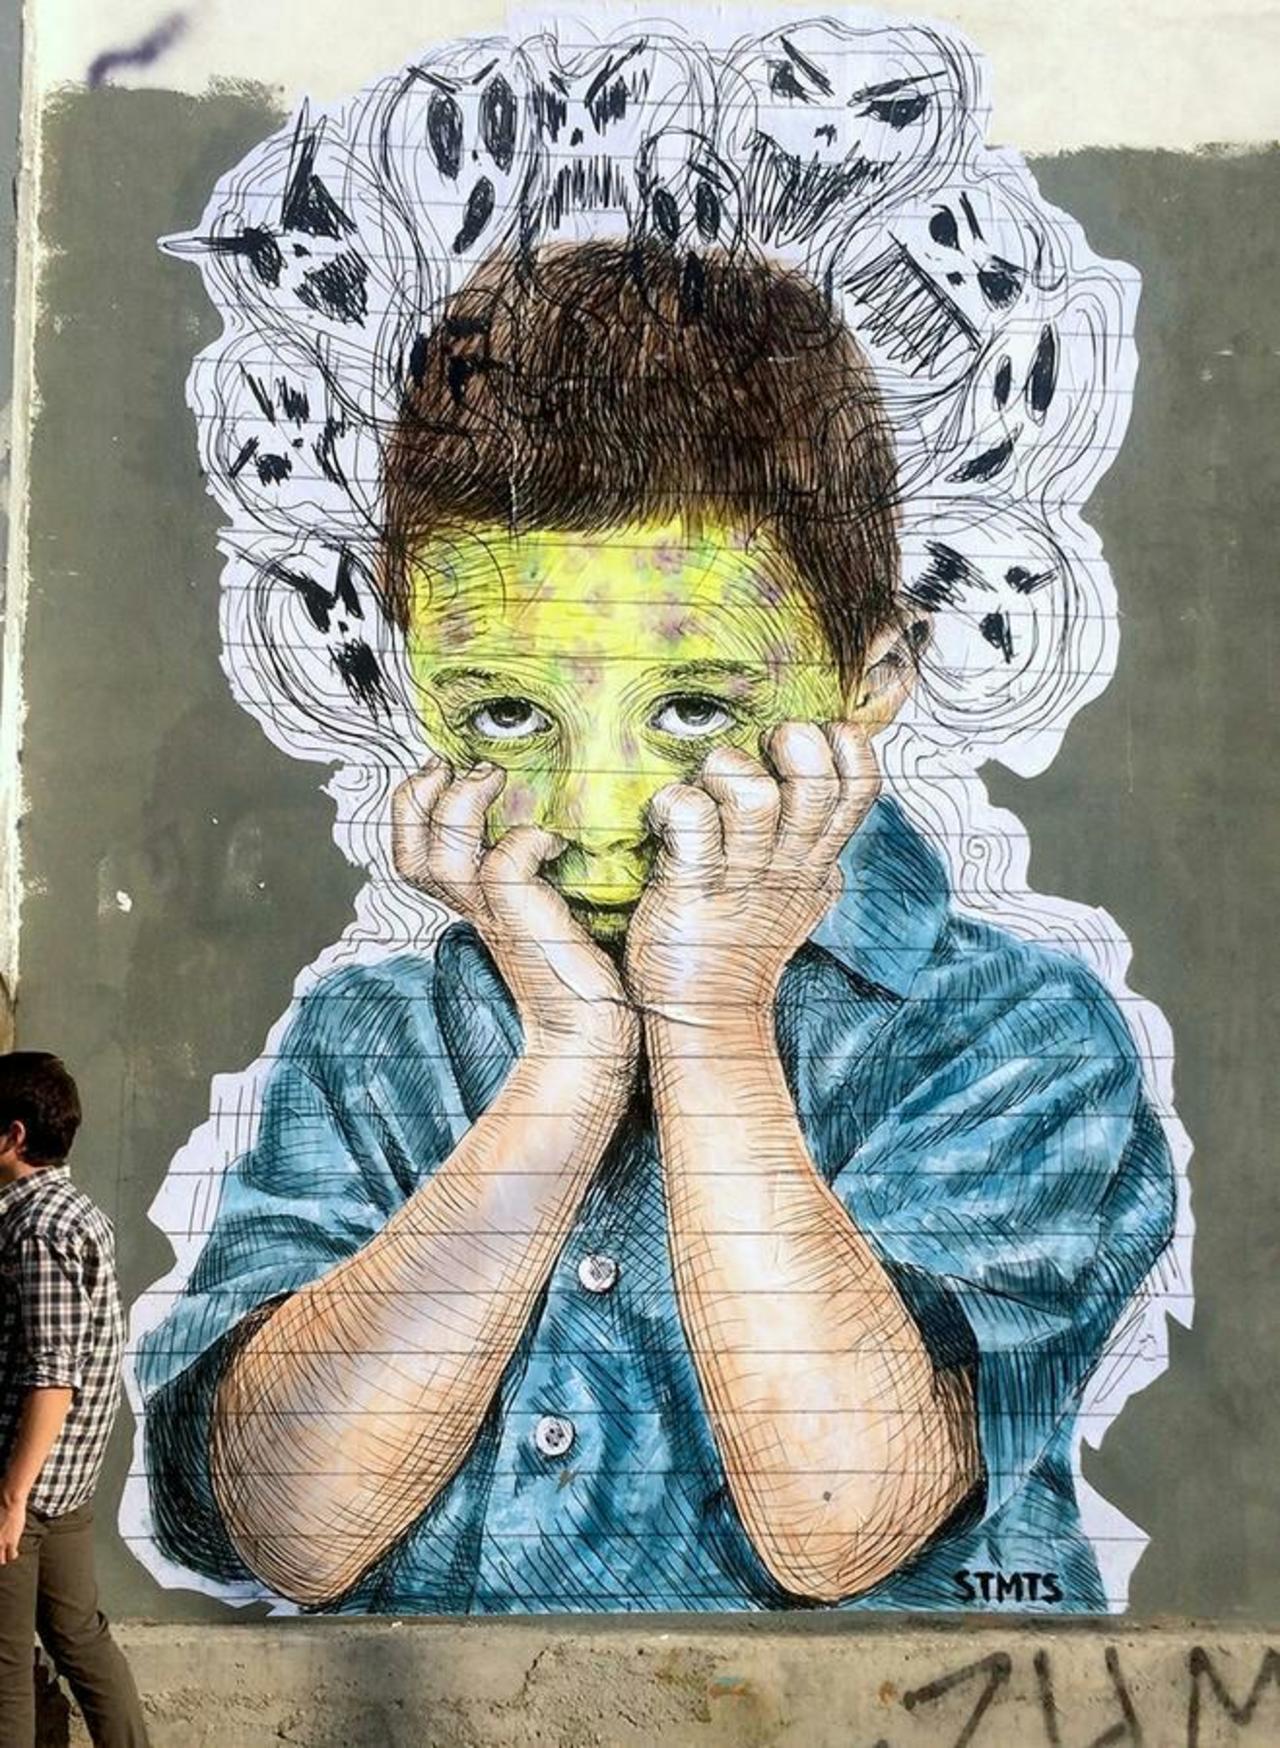 RT @QueGraffiti: "You make me sick"
Artista: Stmts
Atenas, Grecia
#art #streetart #mural #graffiti http://t.co/SEUYpa8k4g